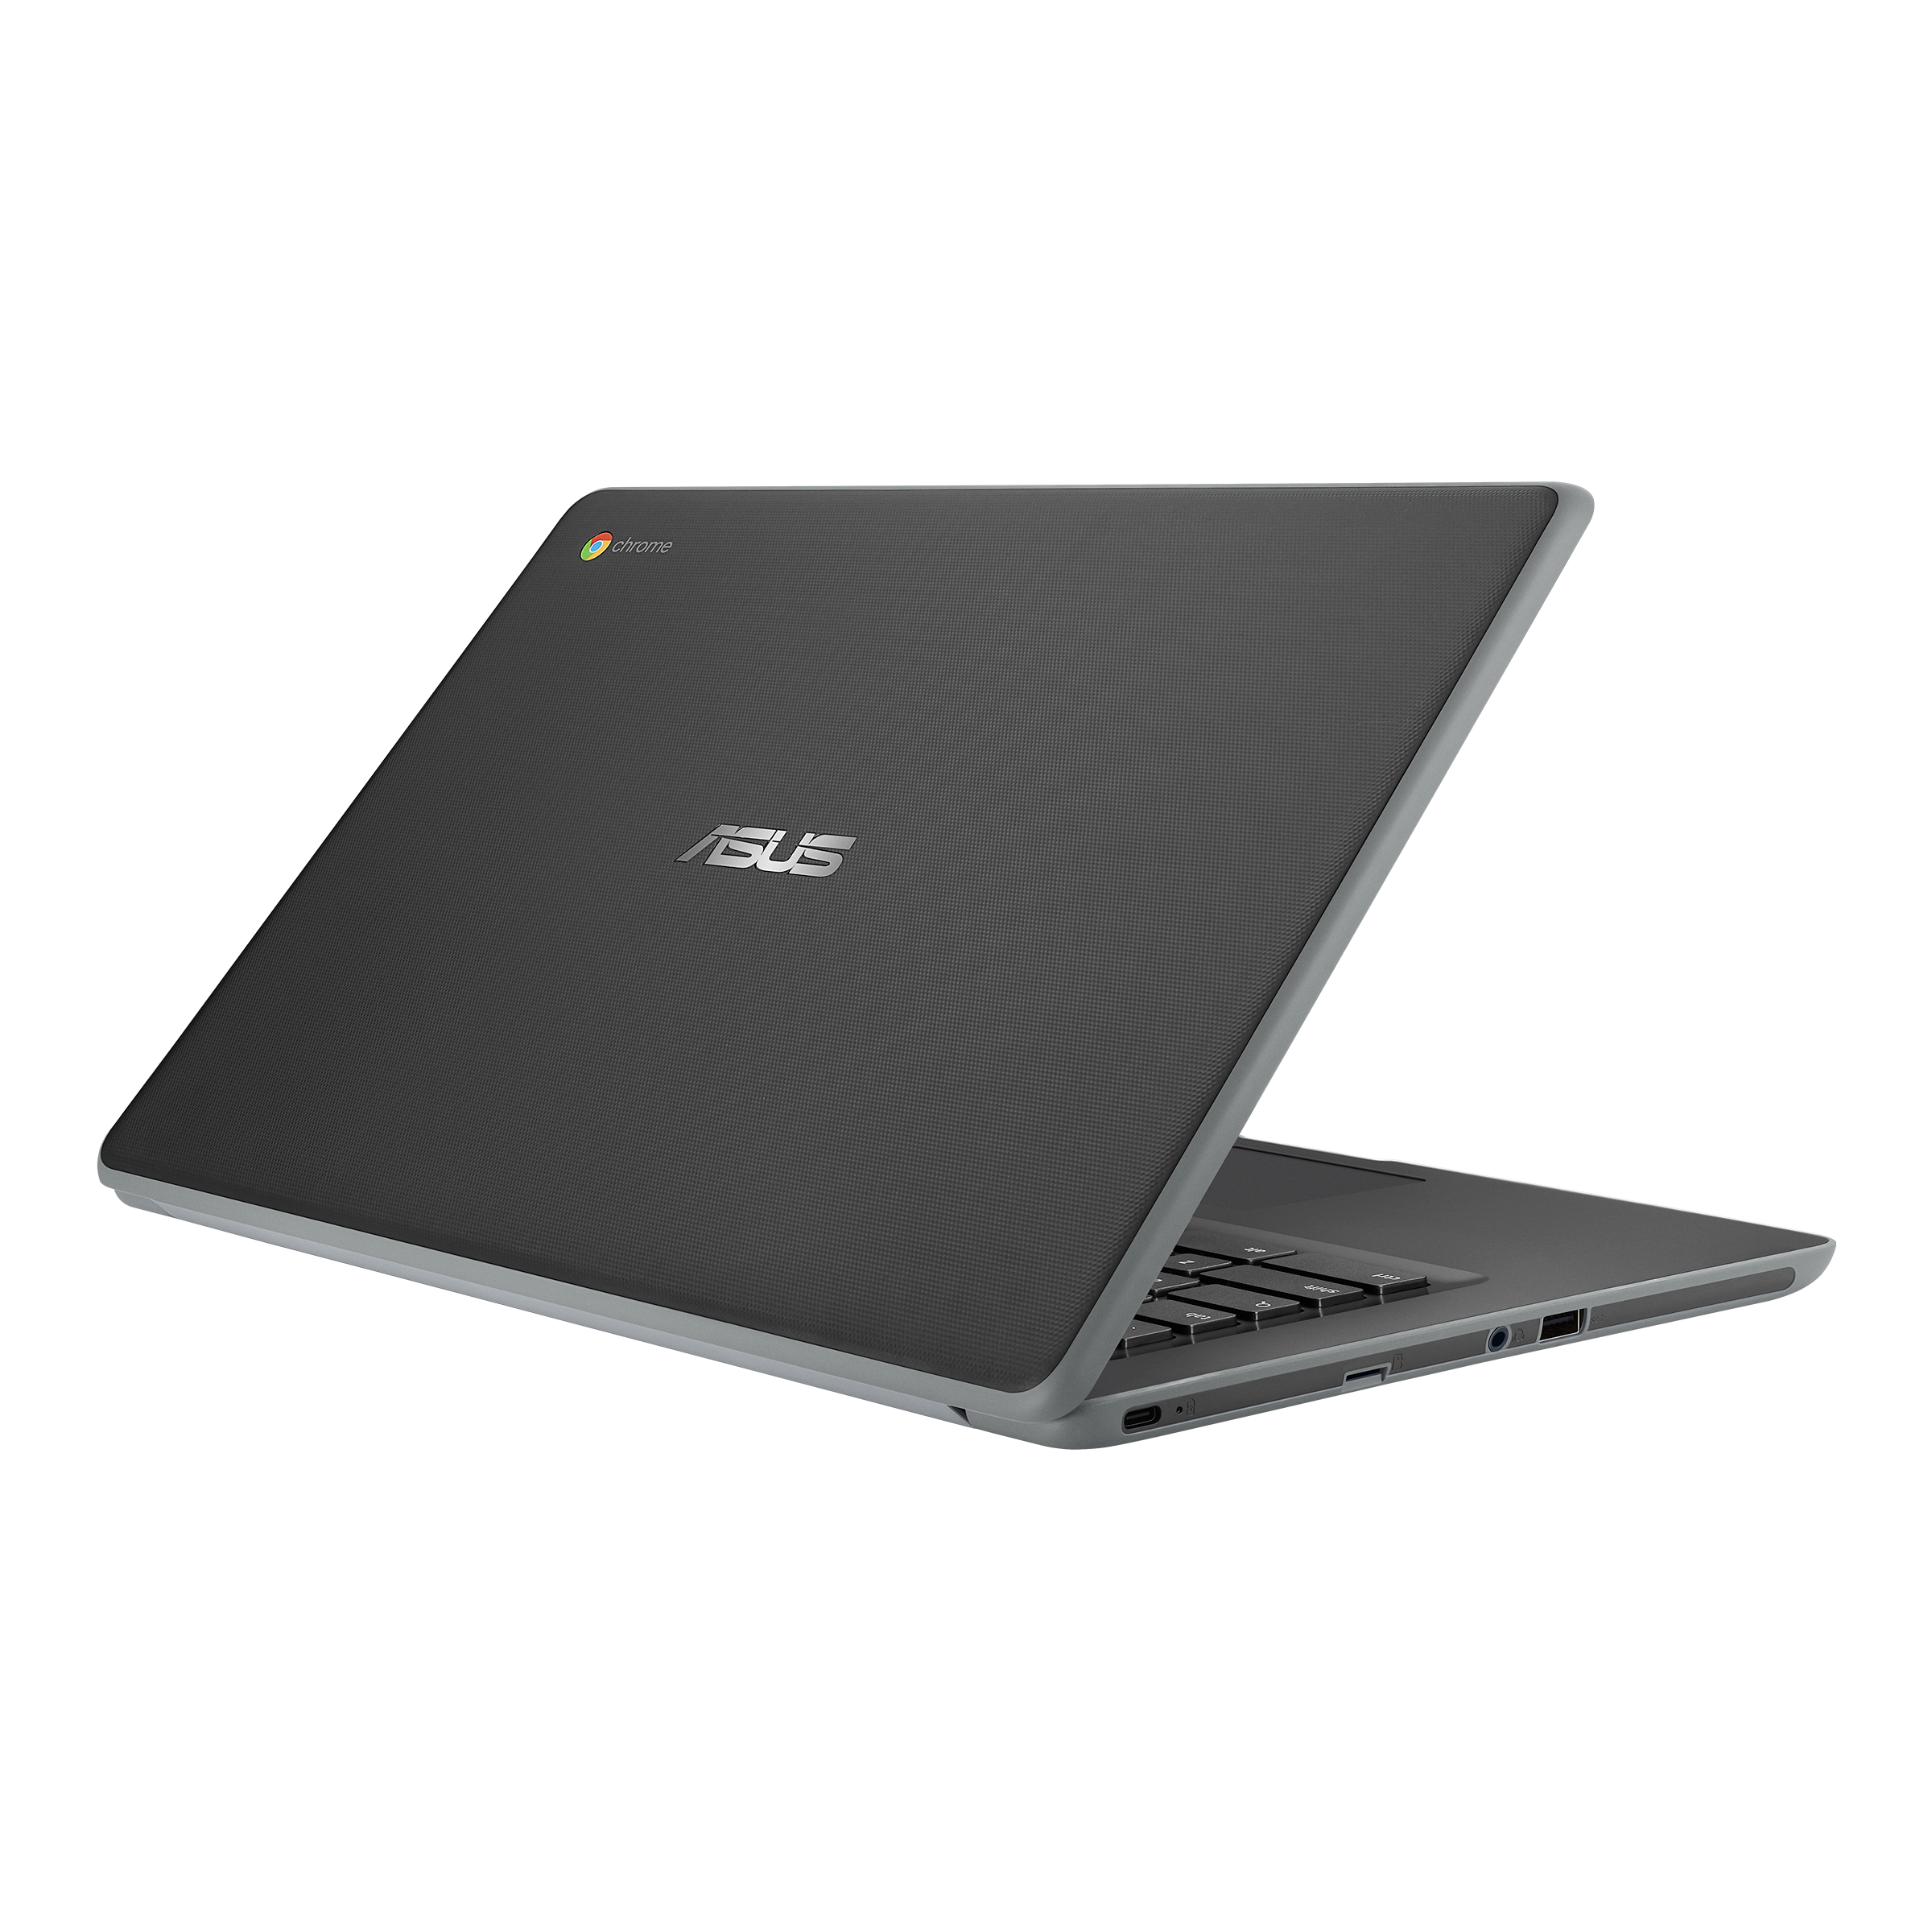 ASUS Chromebook C403｜Laptops For Home｜ASUS Global